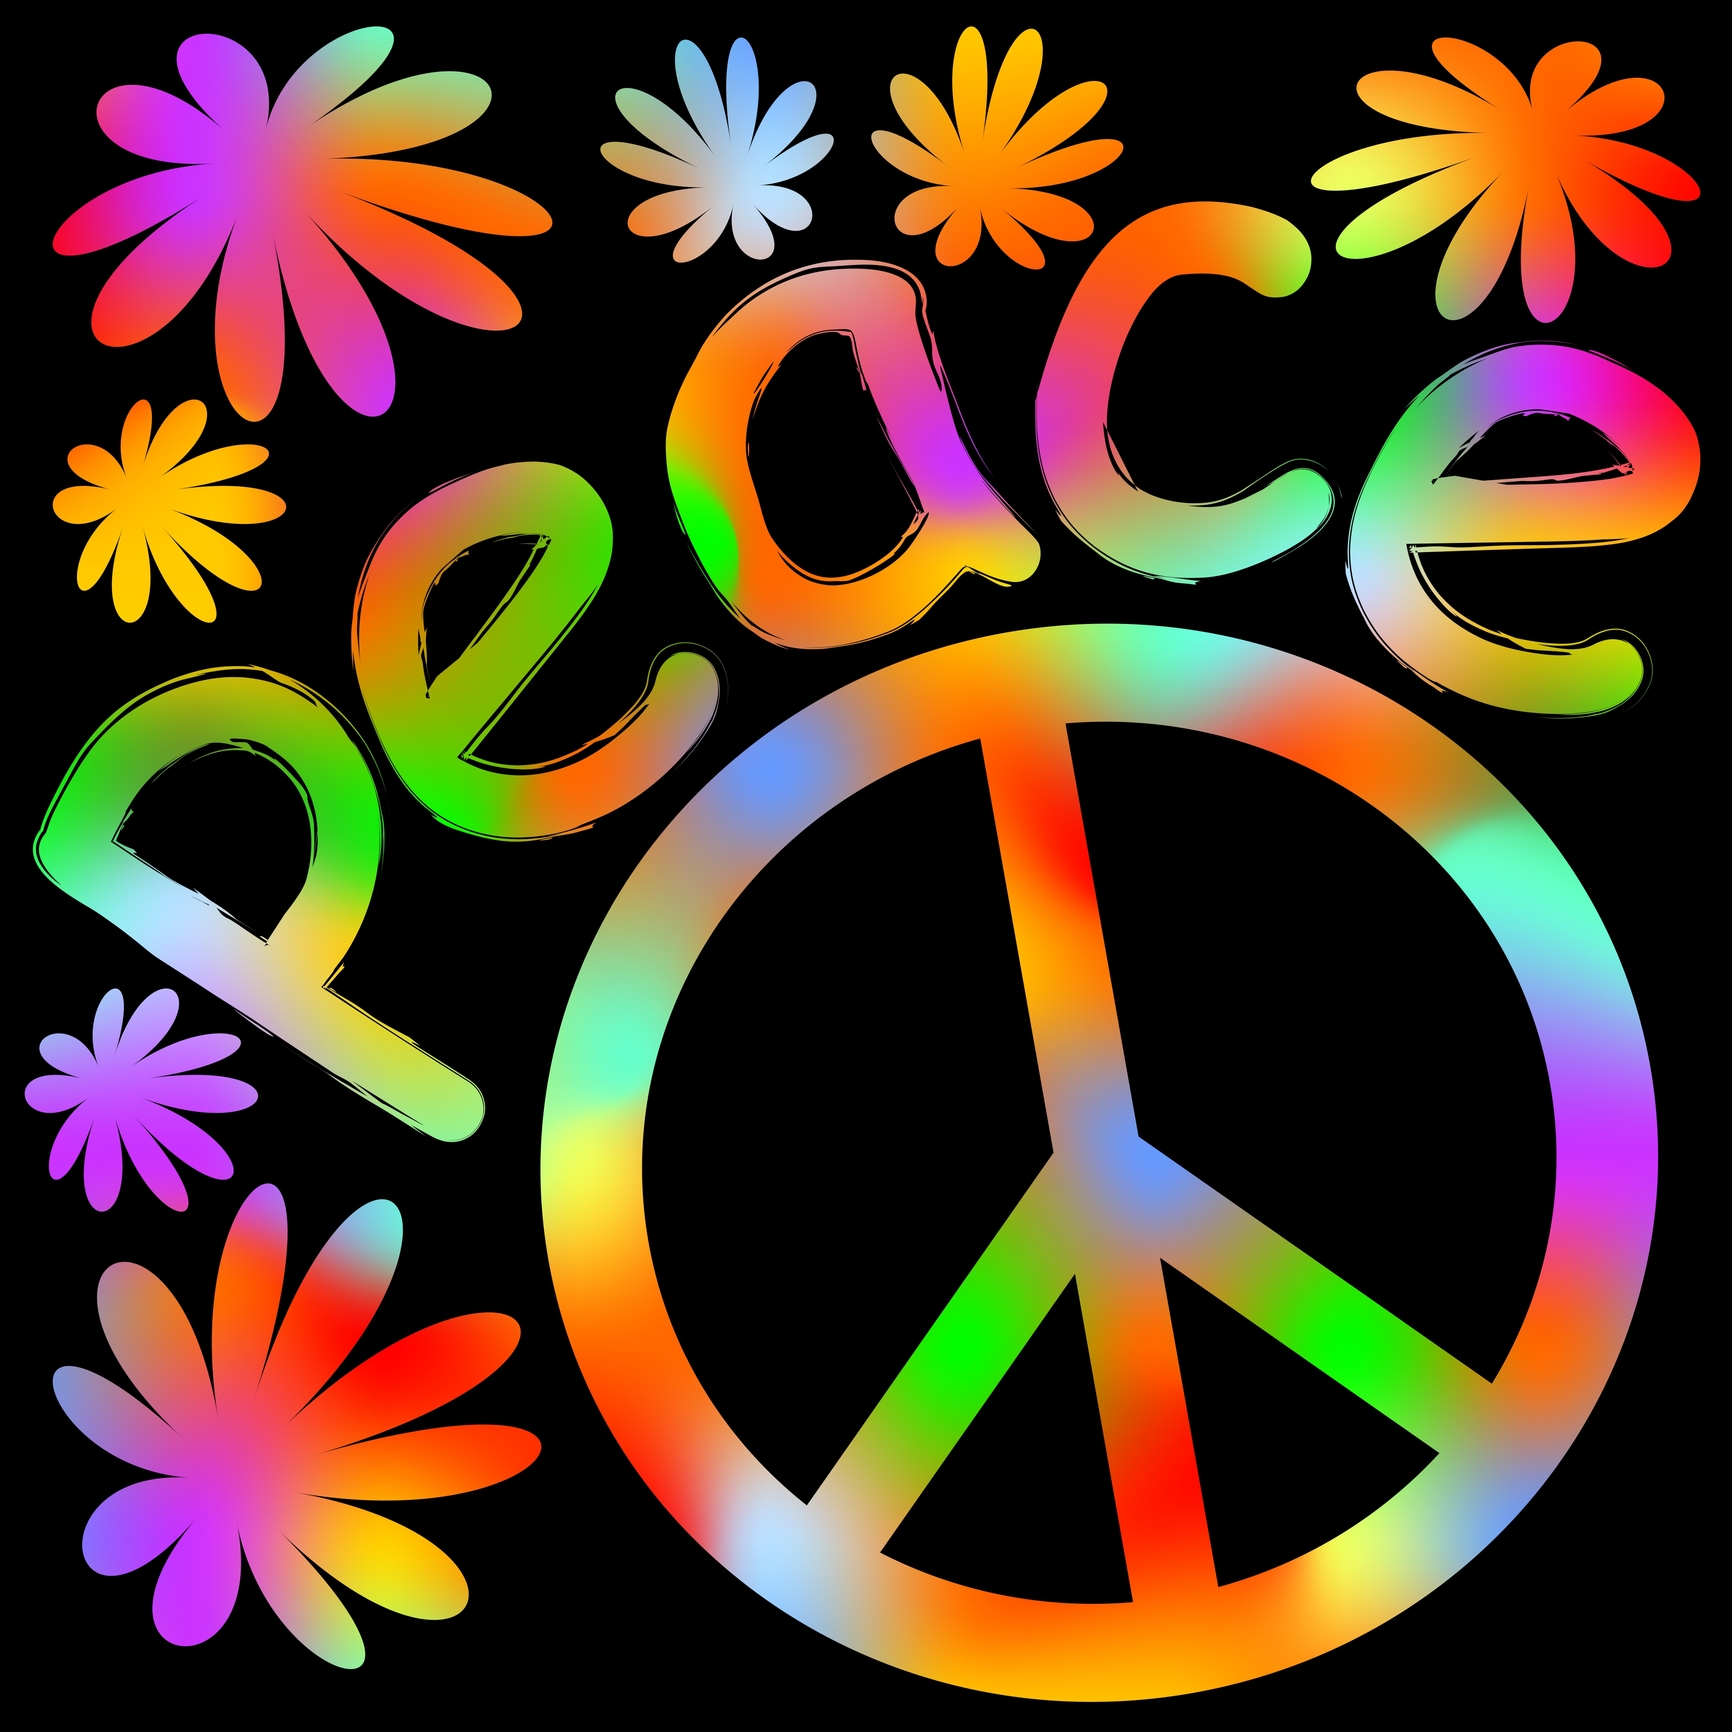 dreamstime_m_69314024-peace sign